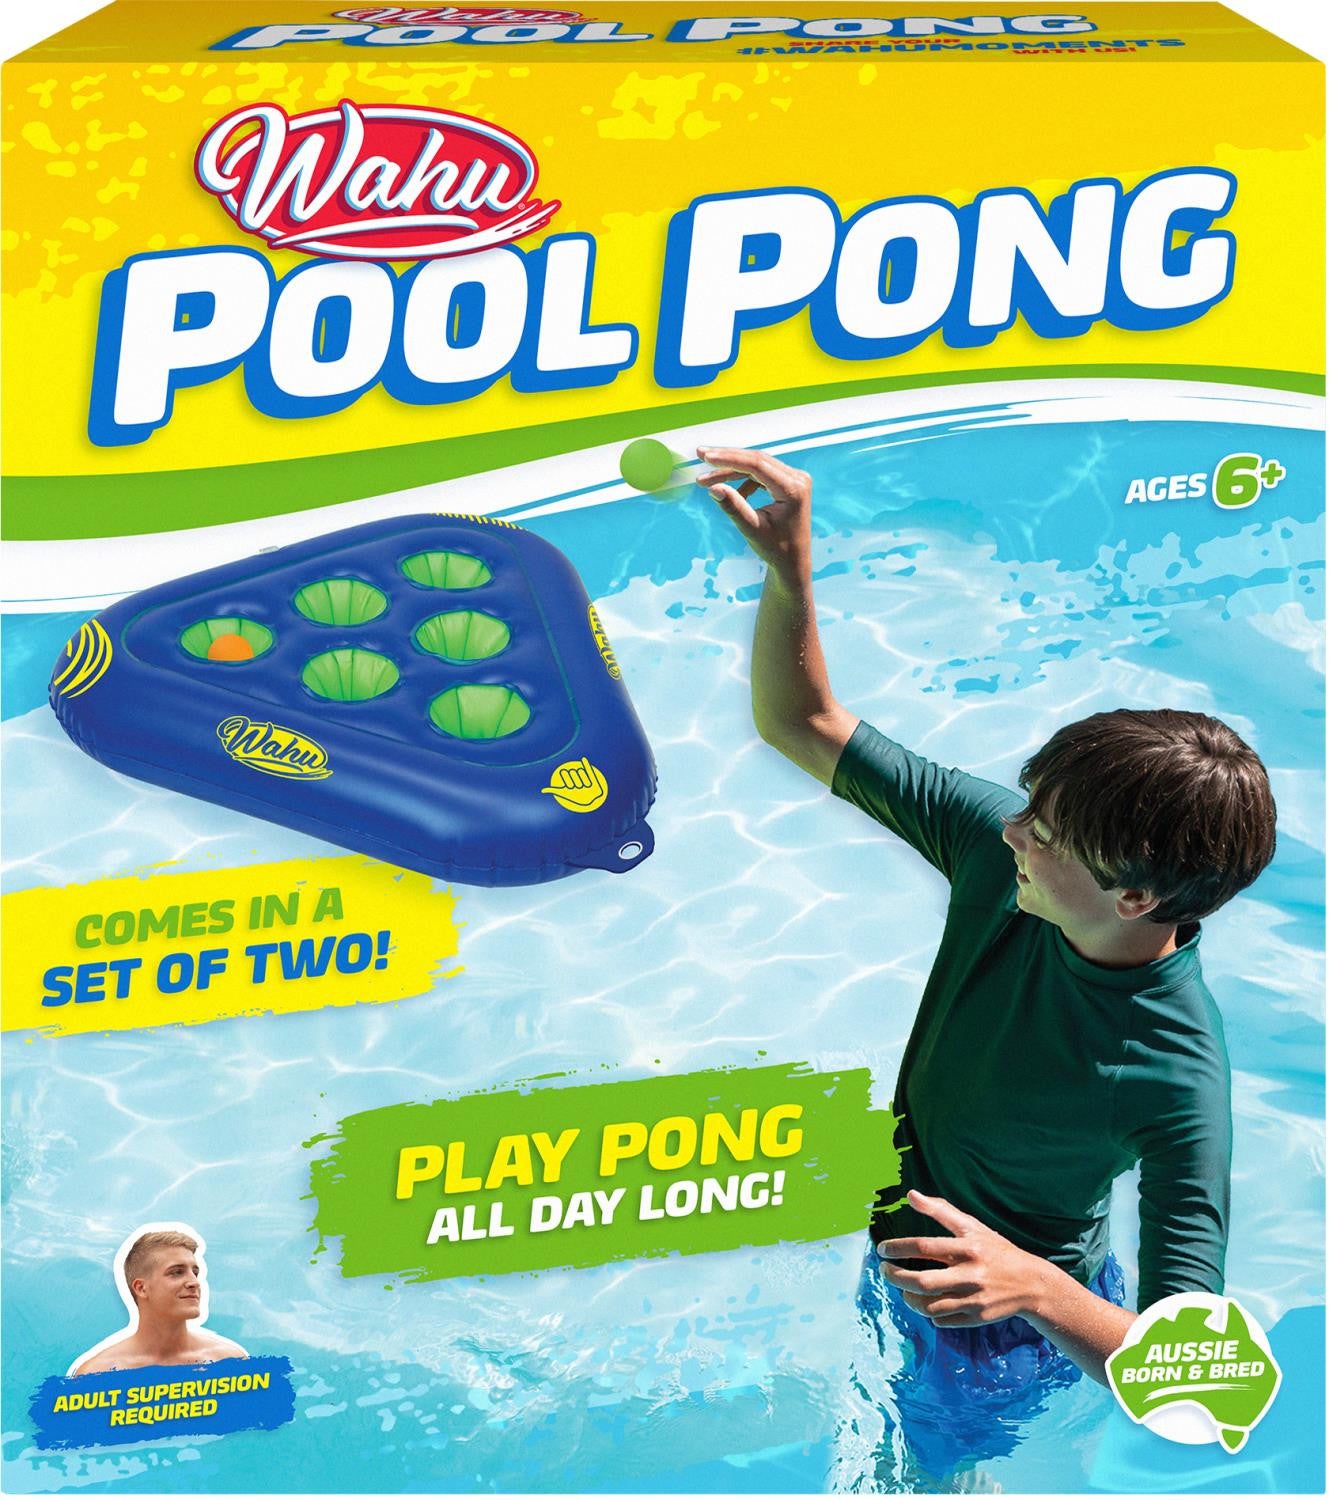 Wahu Pool Pong